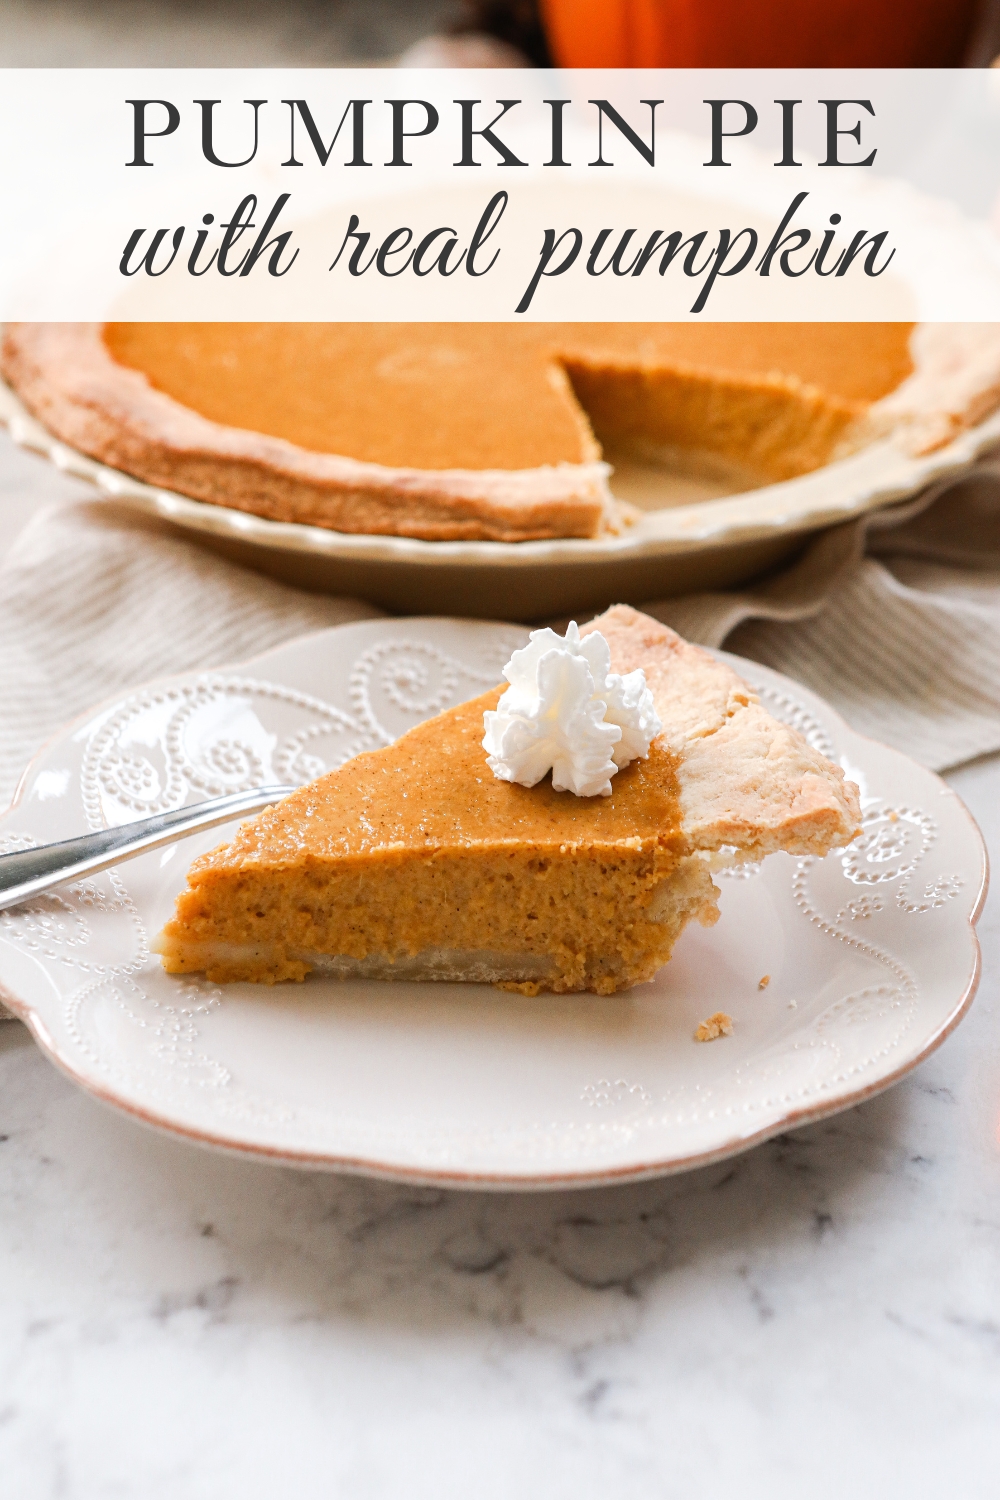 Recipe for pumpkin pie from real pumpkin